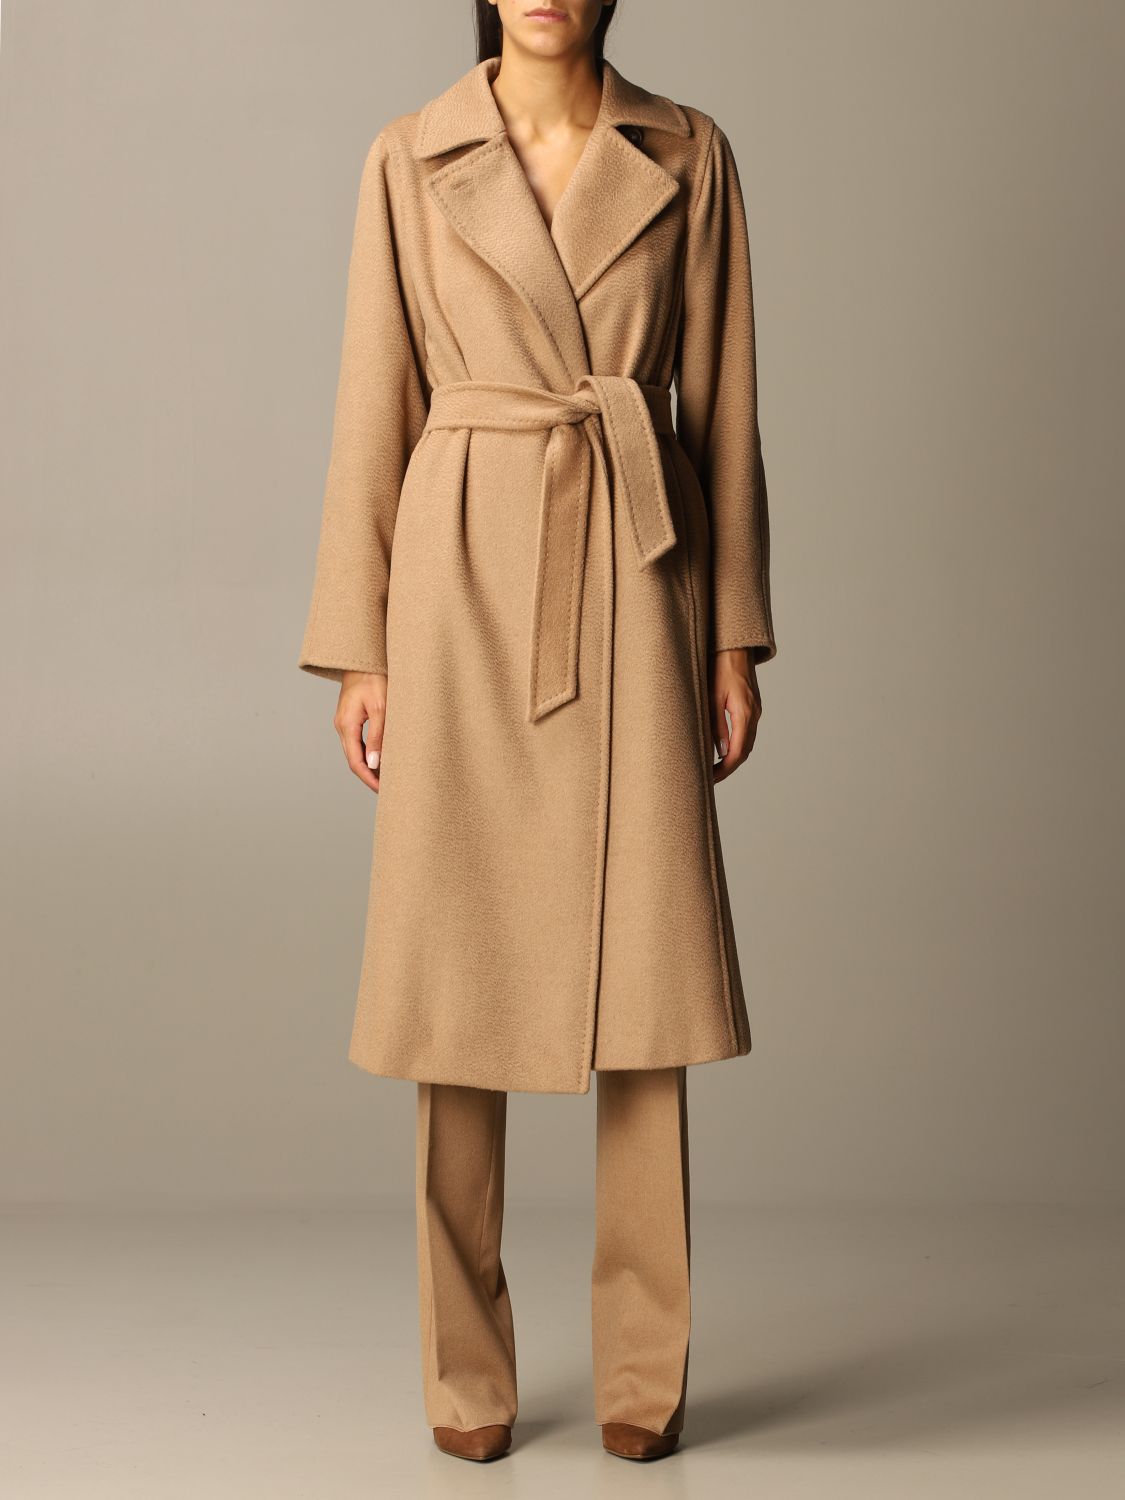 MAX MARA: Manuela wool coat | Coat Max Mara Women Camel | Coat Max Mara 10161903600 GIGLIO.COM